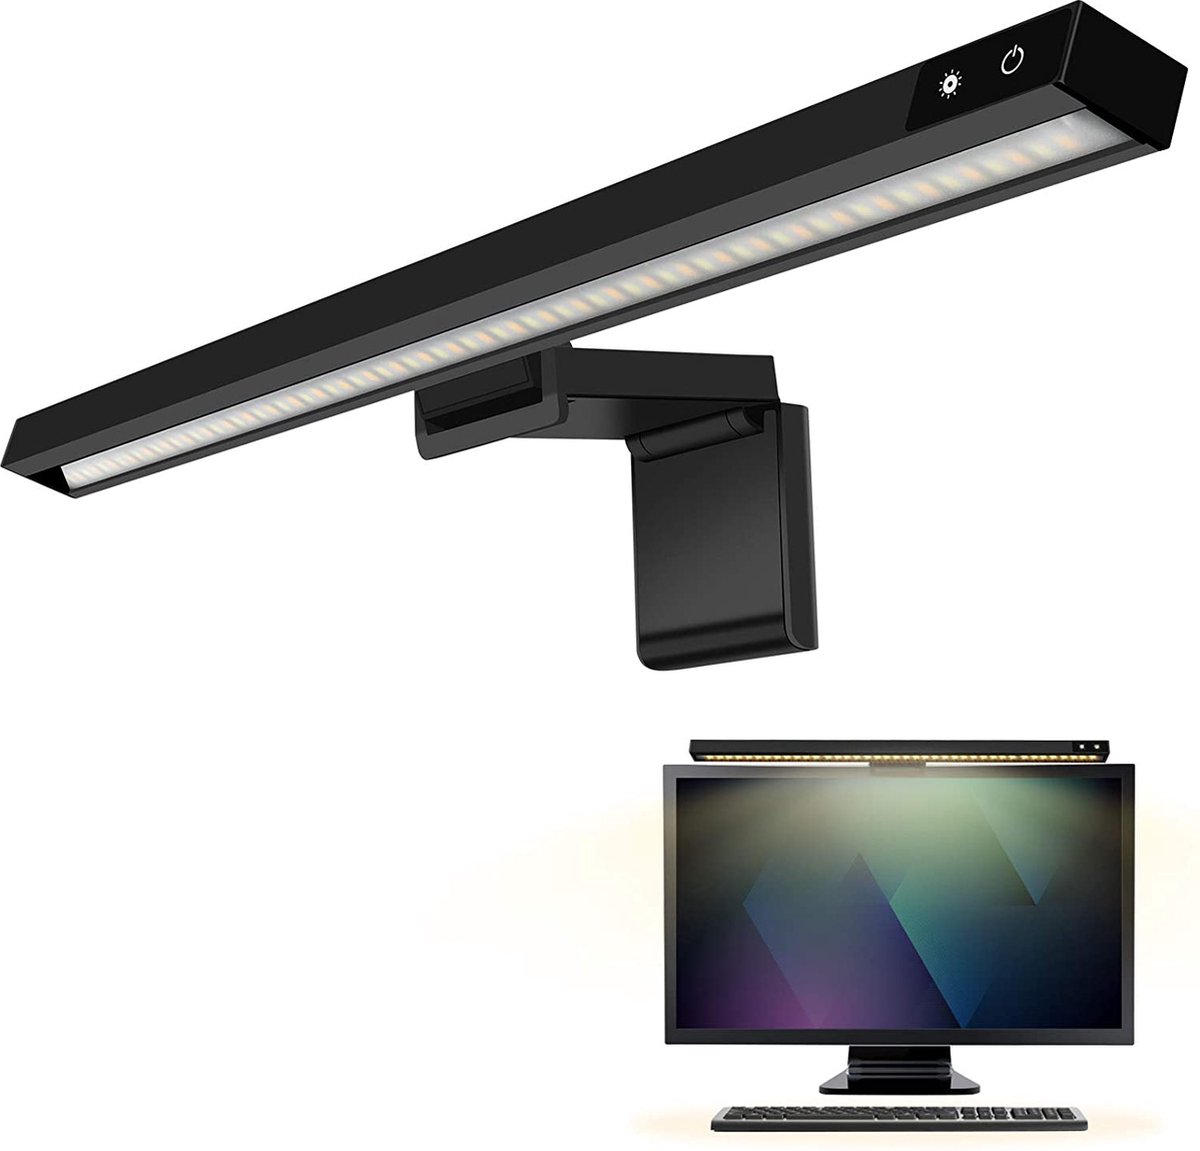 TULITE LED Monitor lamp - Bureaulamp met klem - Dimbaar - USB - Thuiswerken - Zwart review